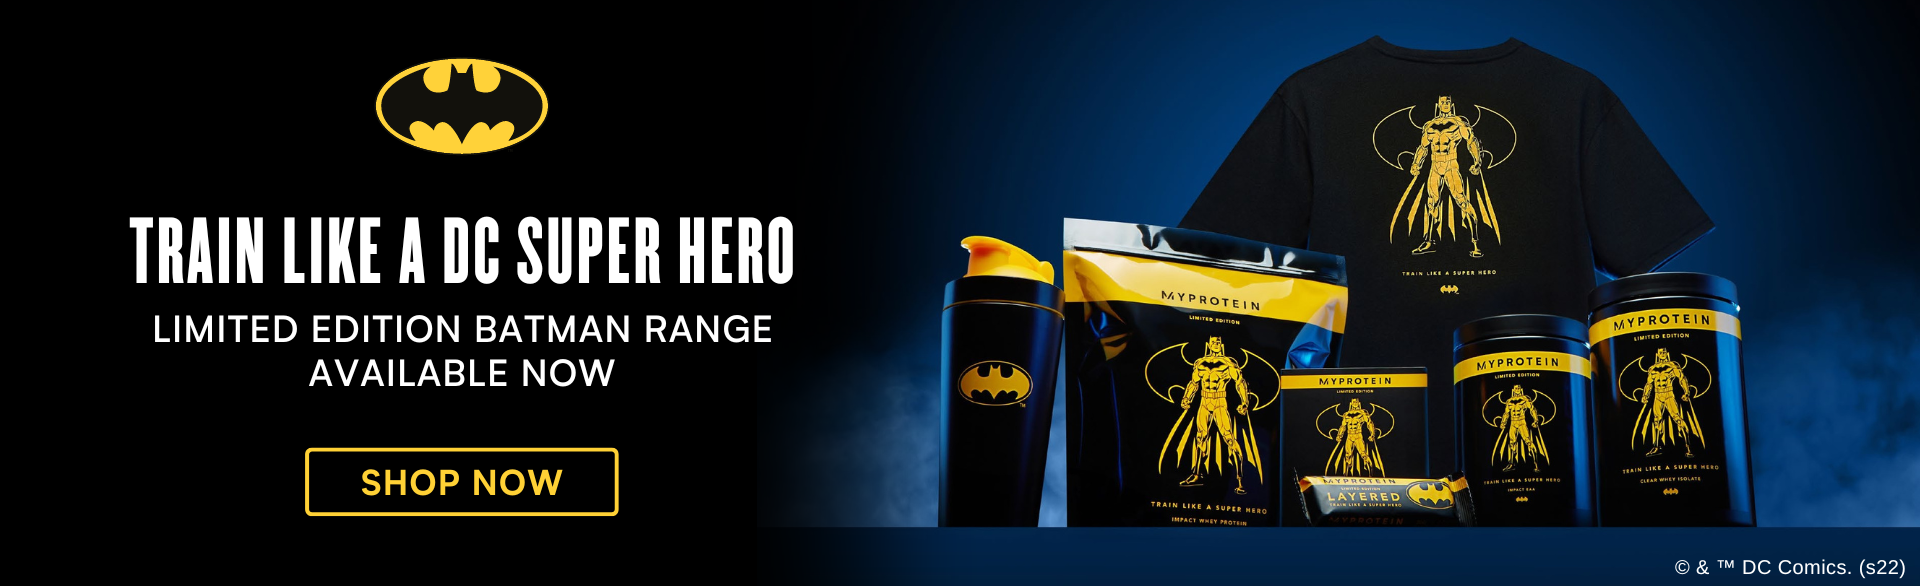 Myprotein x Batman Limited Edition Collection